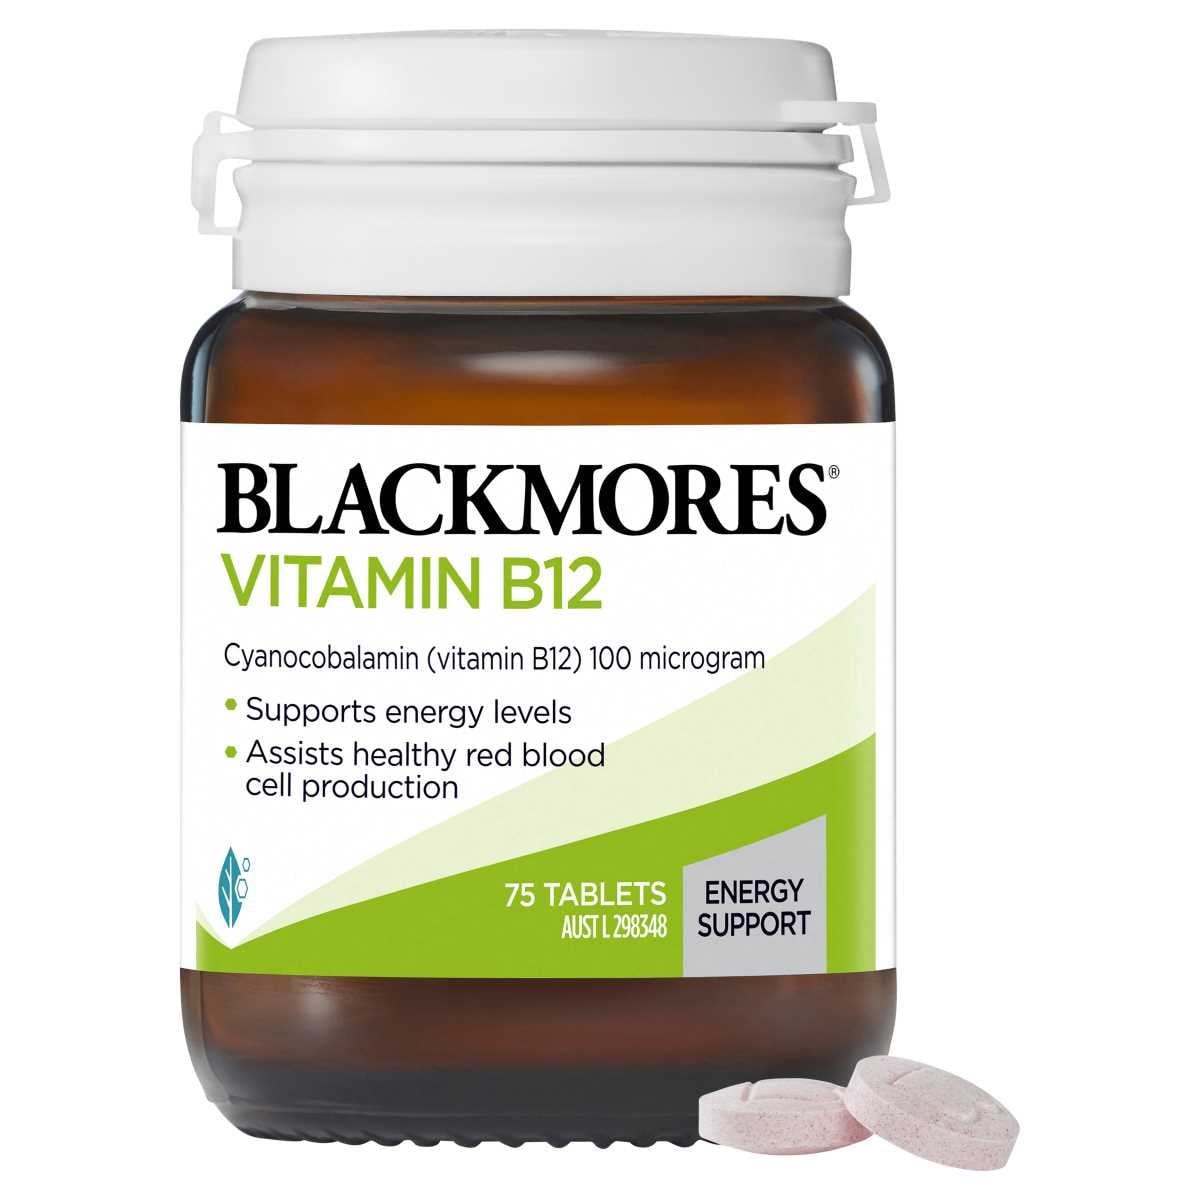 Blackmores Vitamin B12 100mcg 75 Tablets Australia